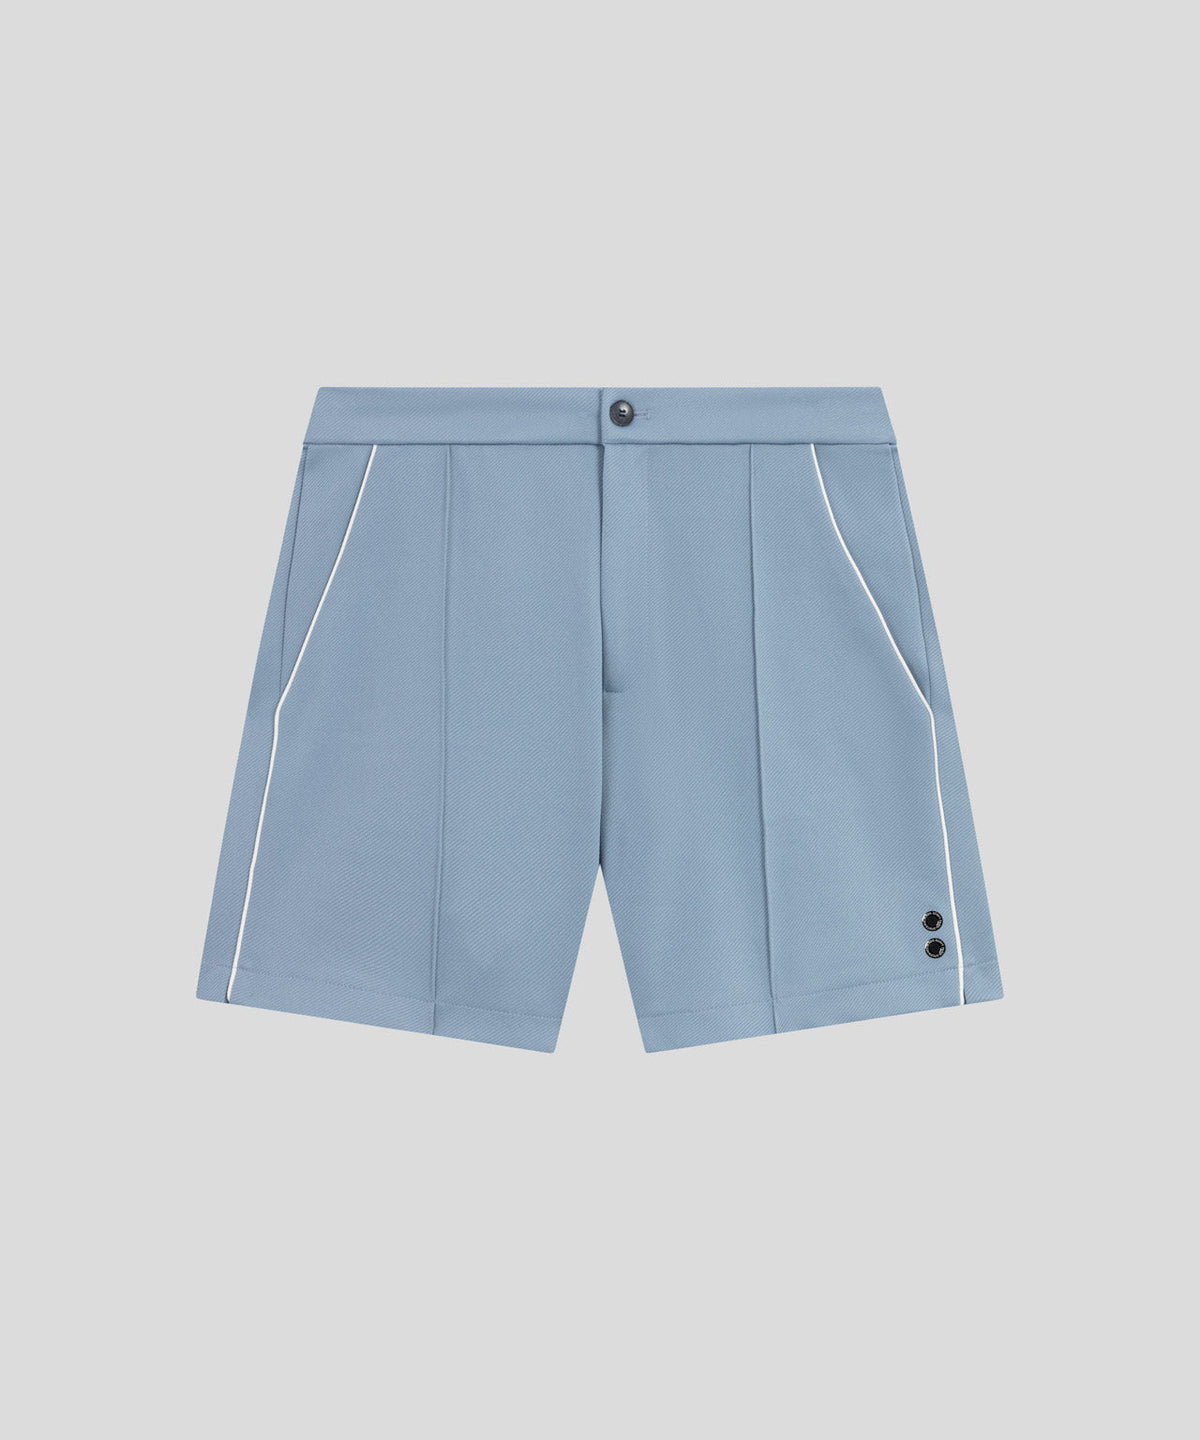 Tennis Shorts w Piping: Dusty Blue